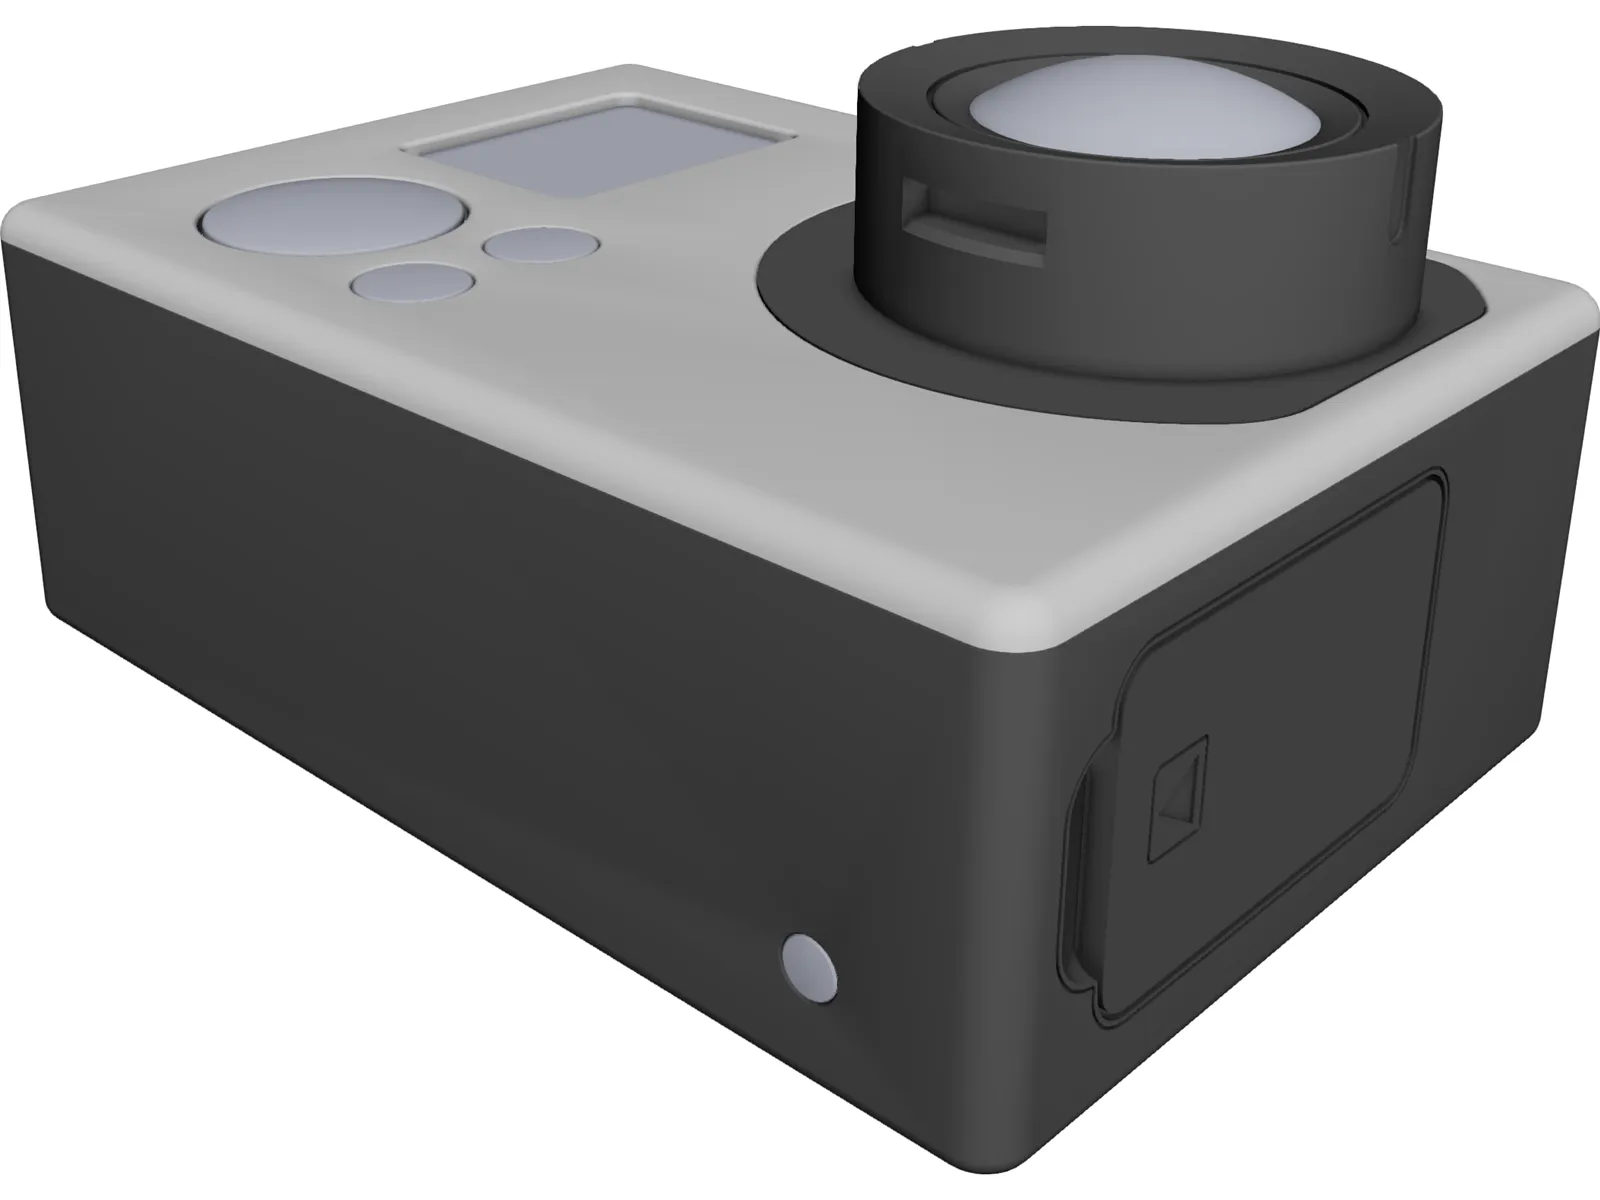 GoPro Camera 3D Model